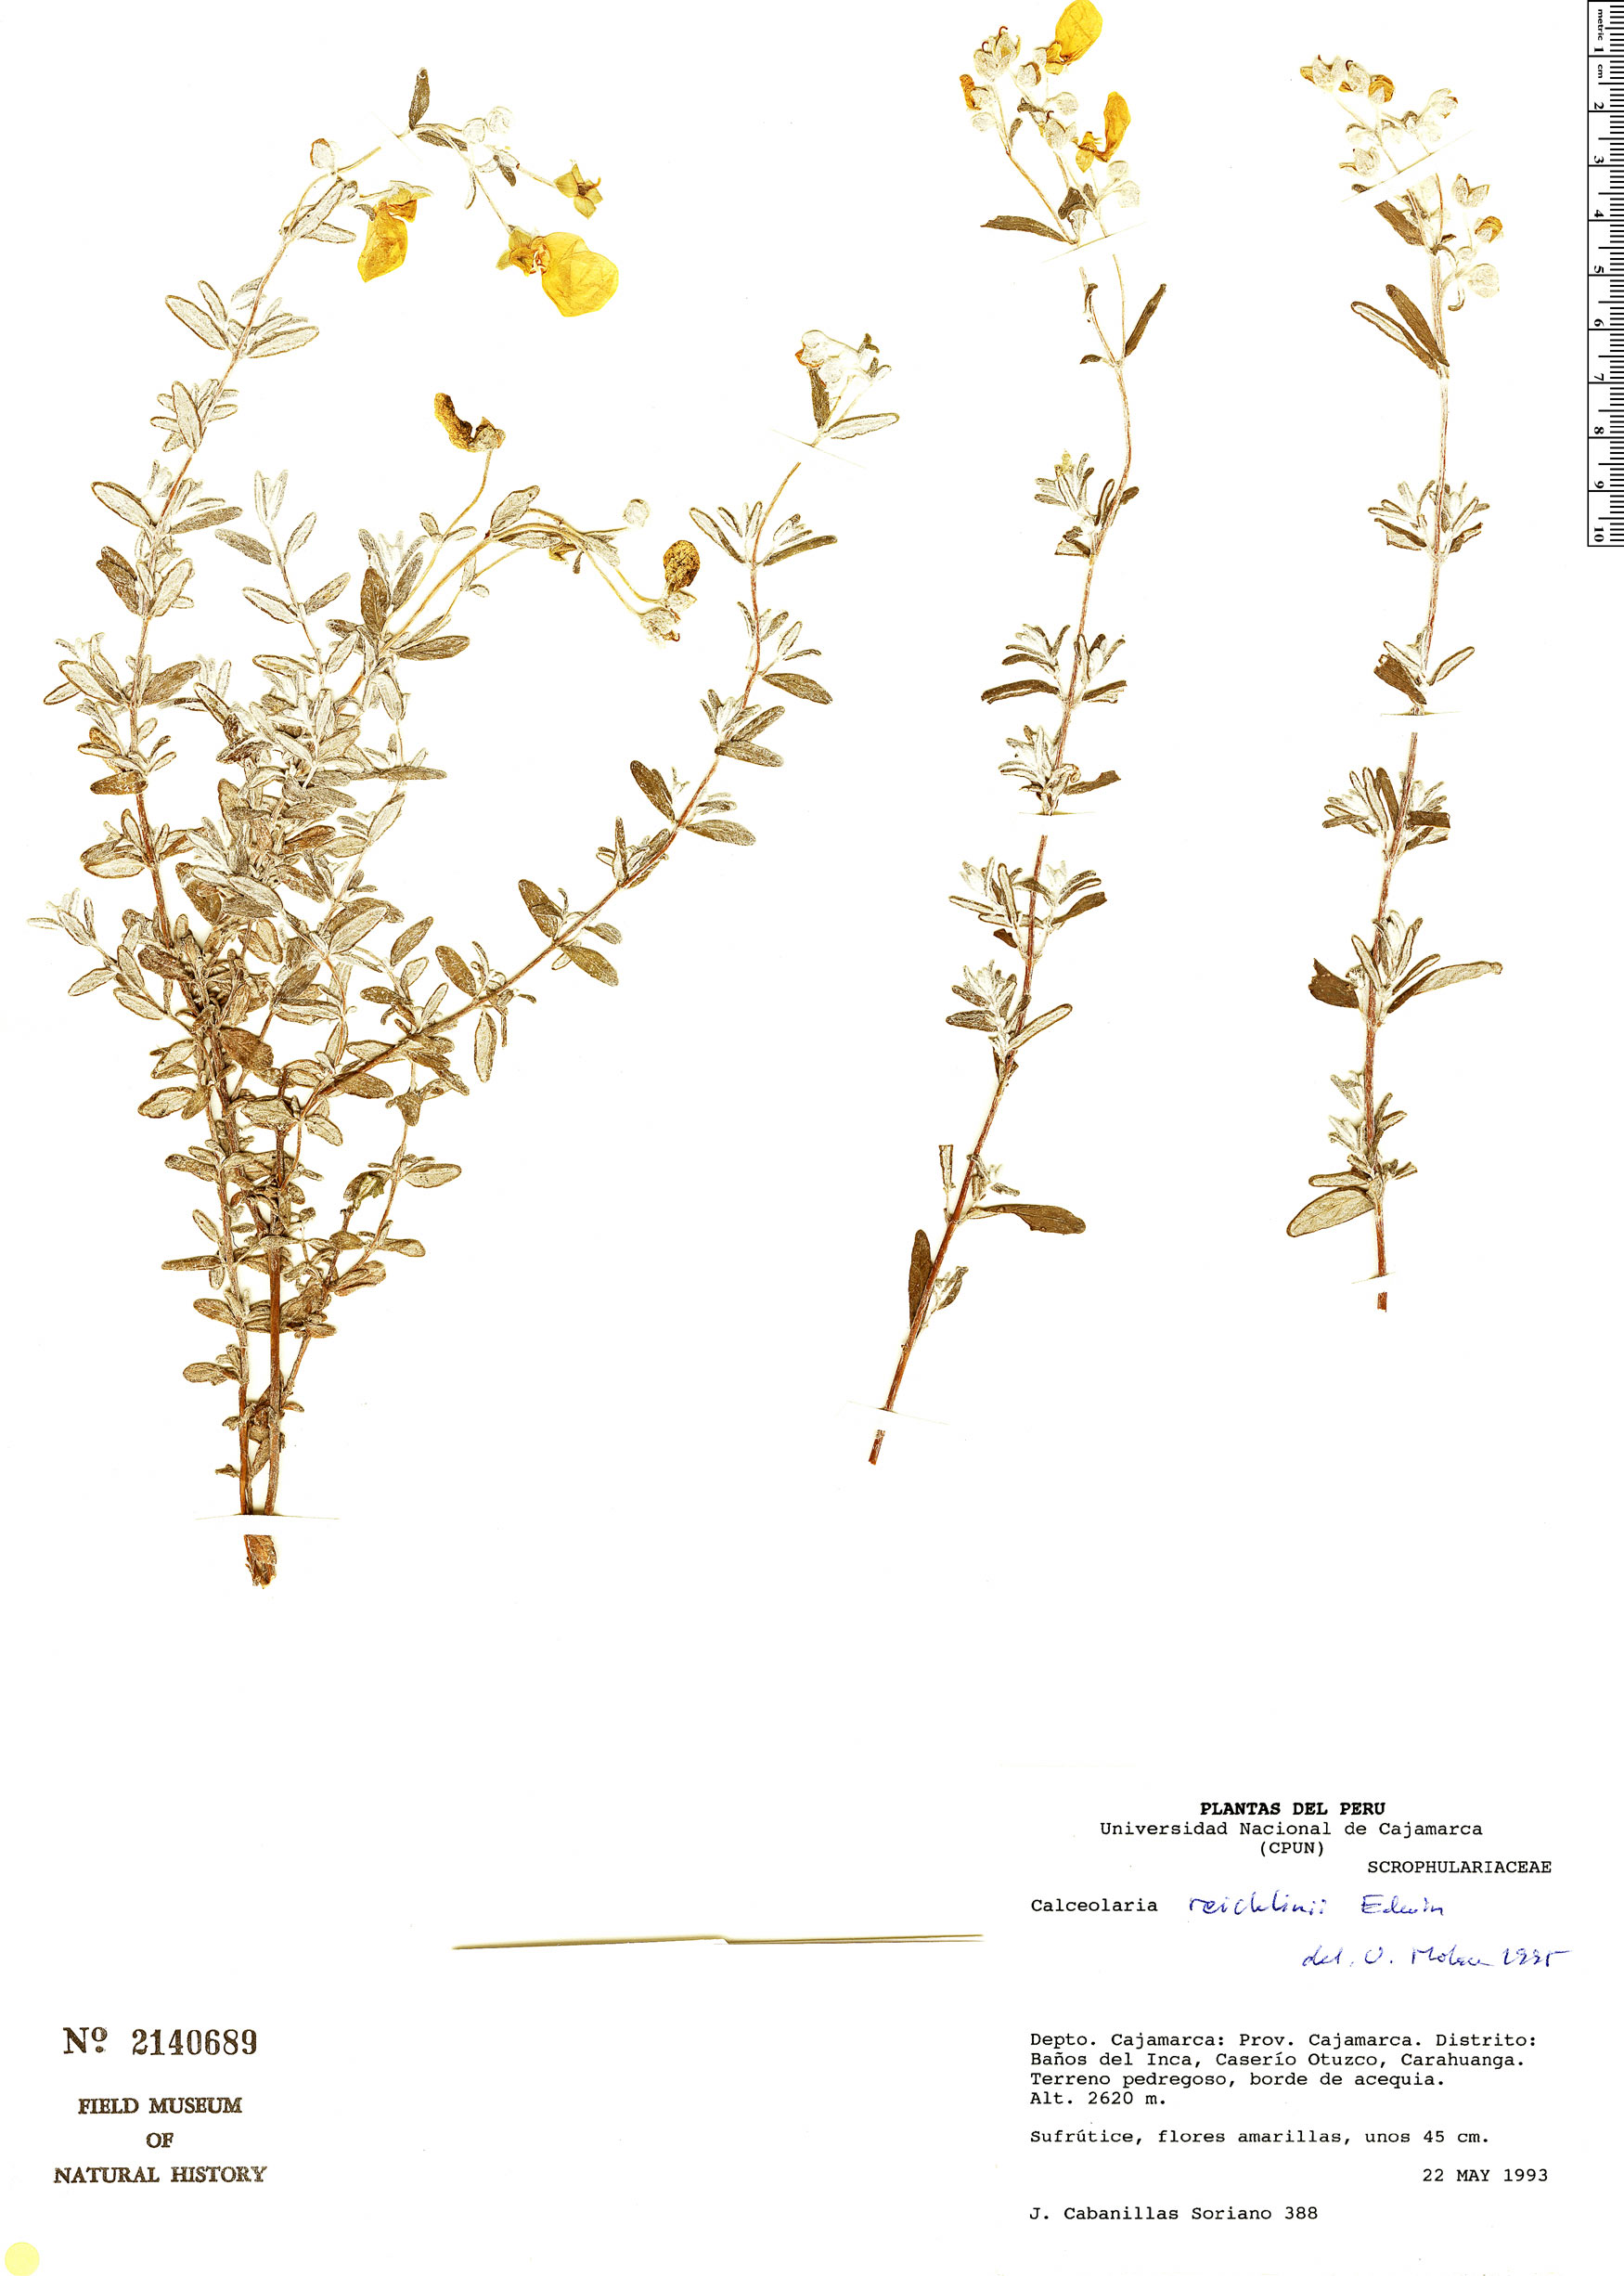 Calceolaria reichlinii image